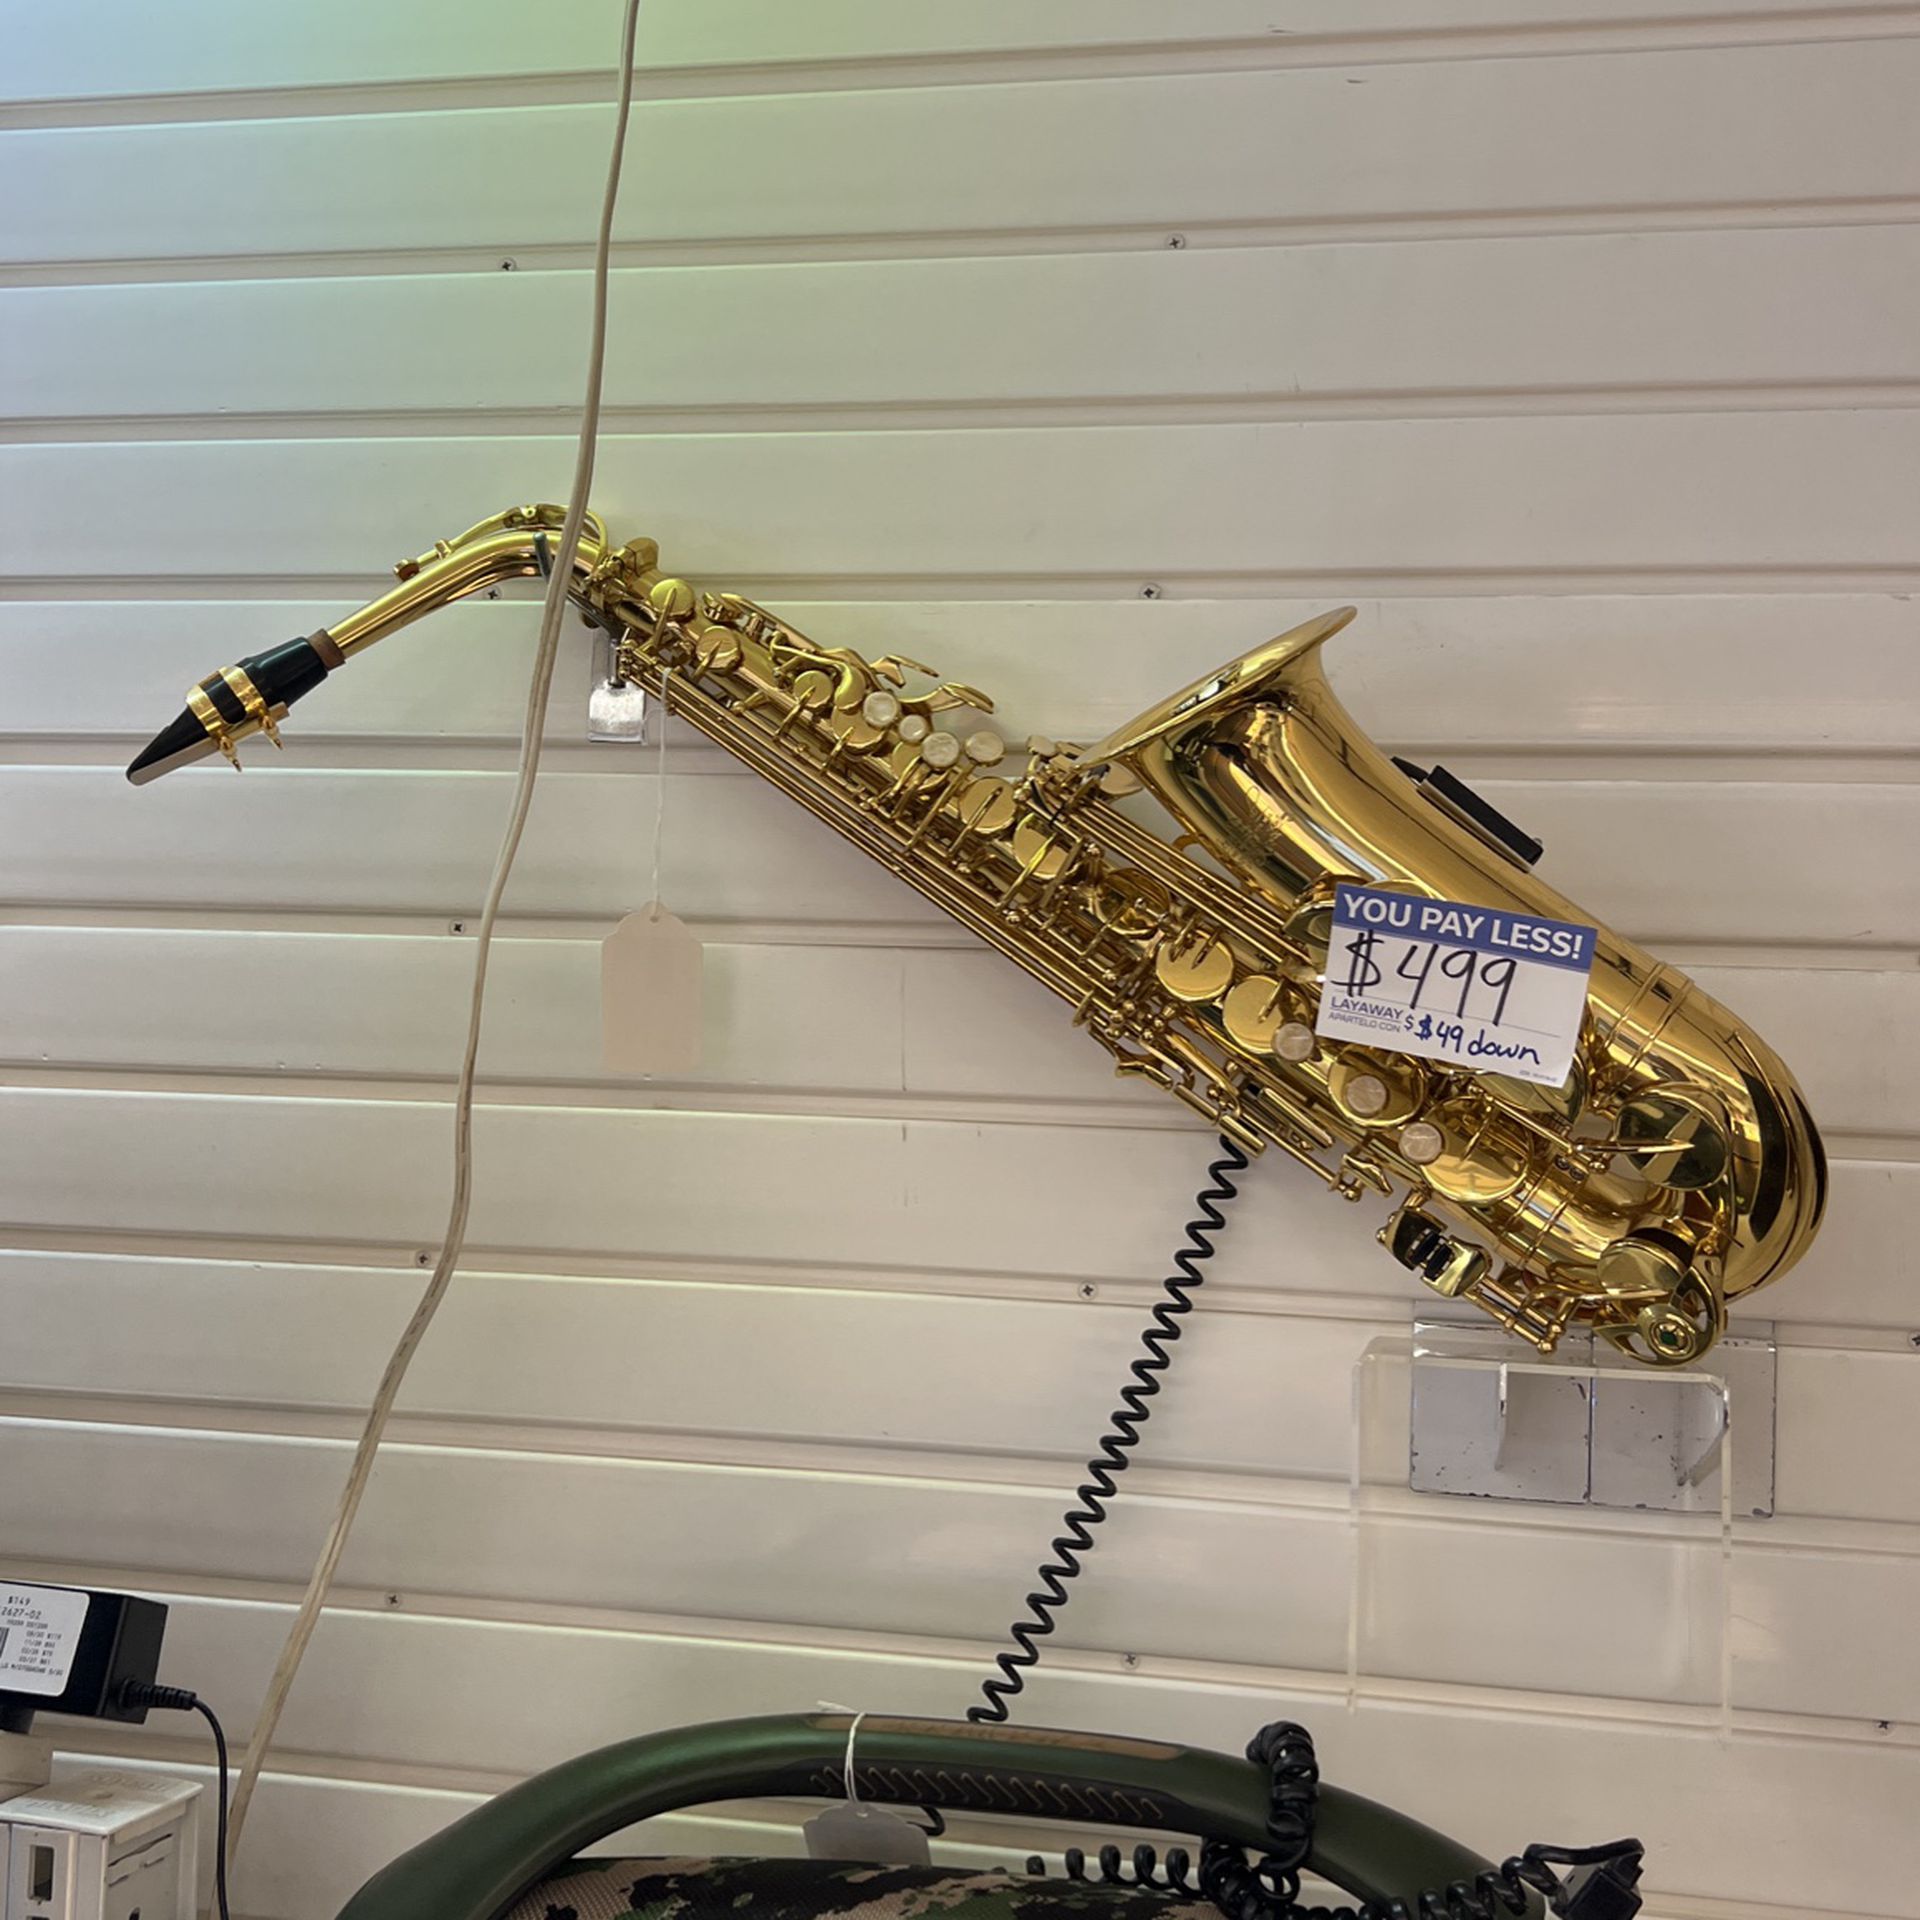 Jean Paul Saxophone Instrument 